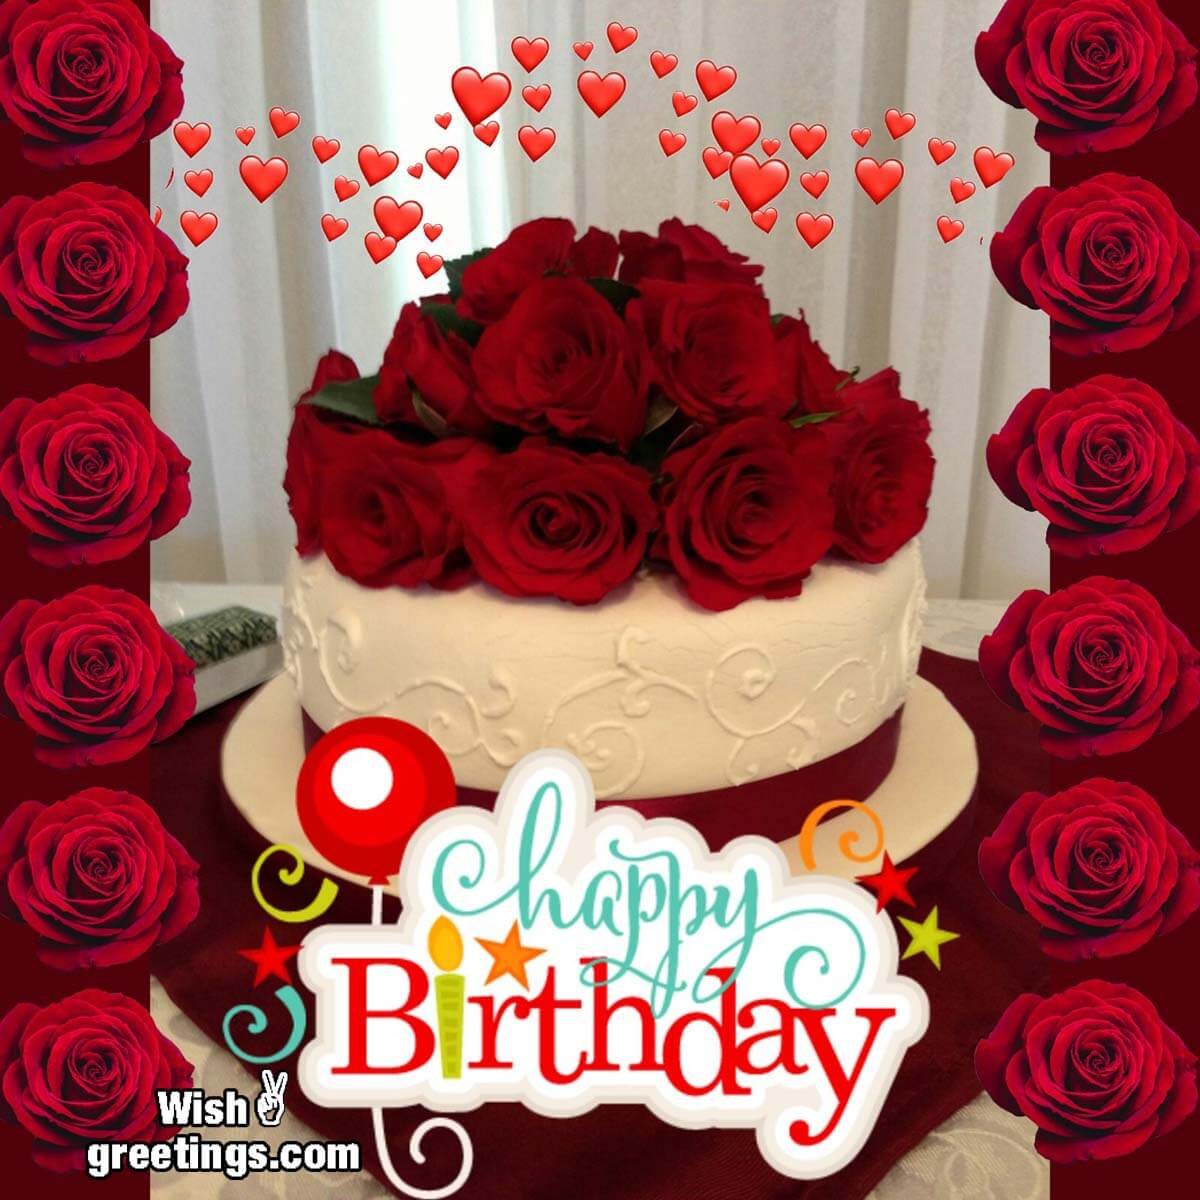 Happy Birthday Cake With Roses